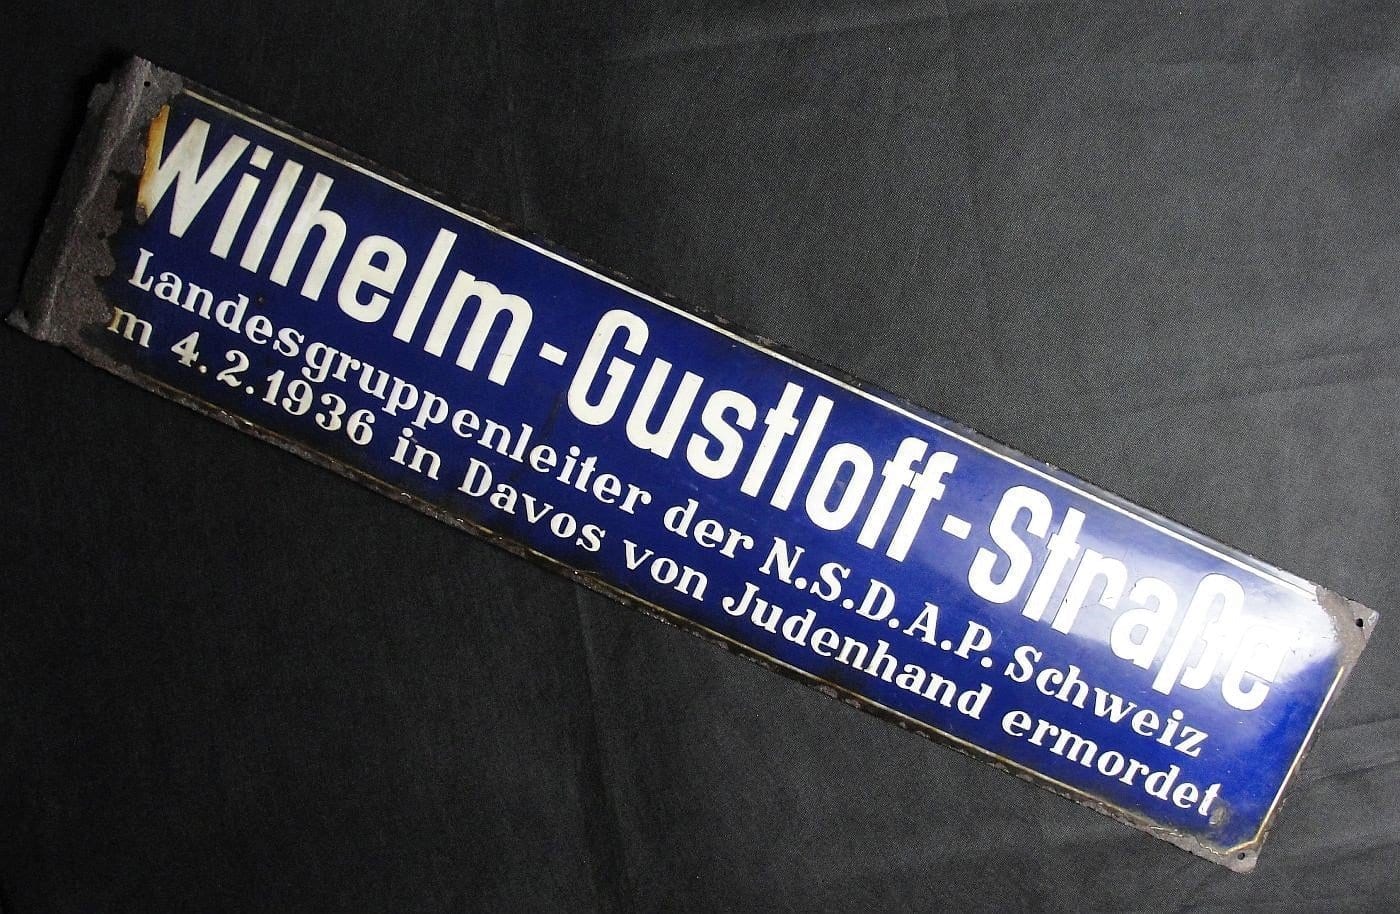 Large Anti-Semitic Wilhelm -Gustloff - Straße Murdered at Jewish Hands Sign